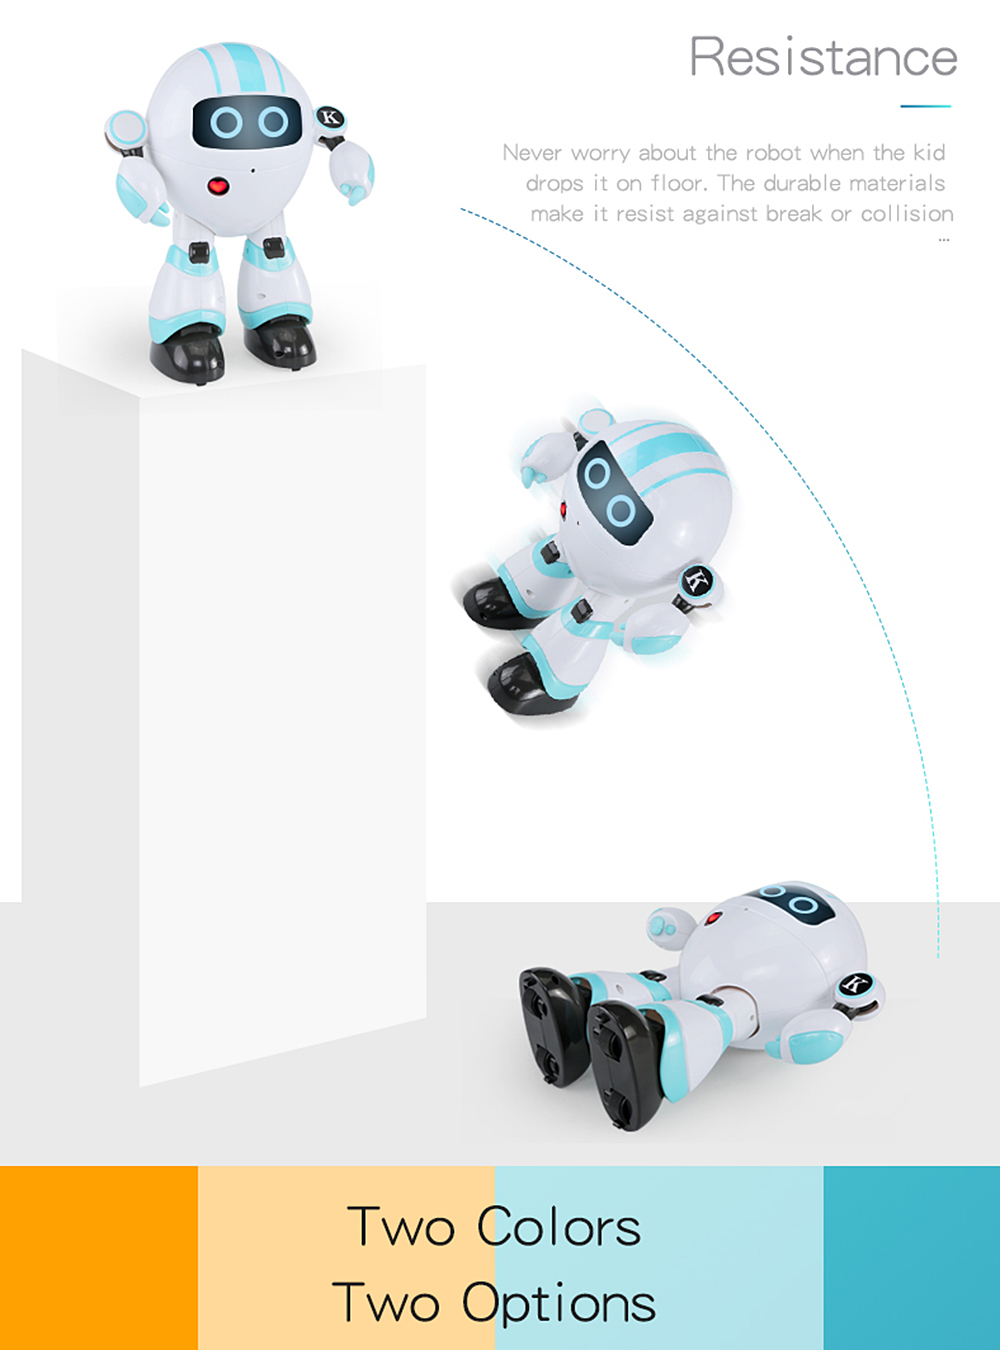 JJRC R14 Intelligent Remote Control Round Robot Support Voice LED Light Walk Slide Movement